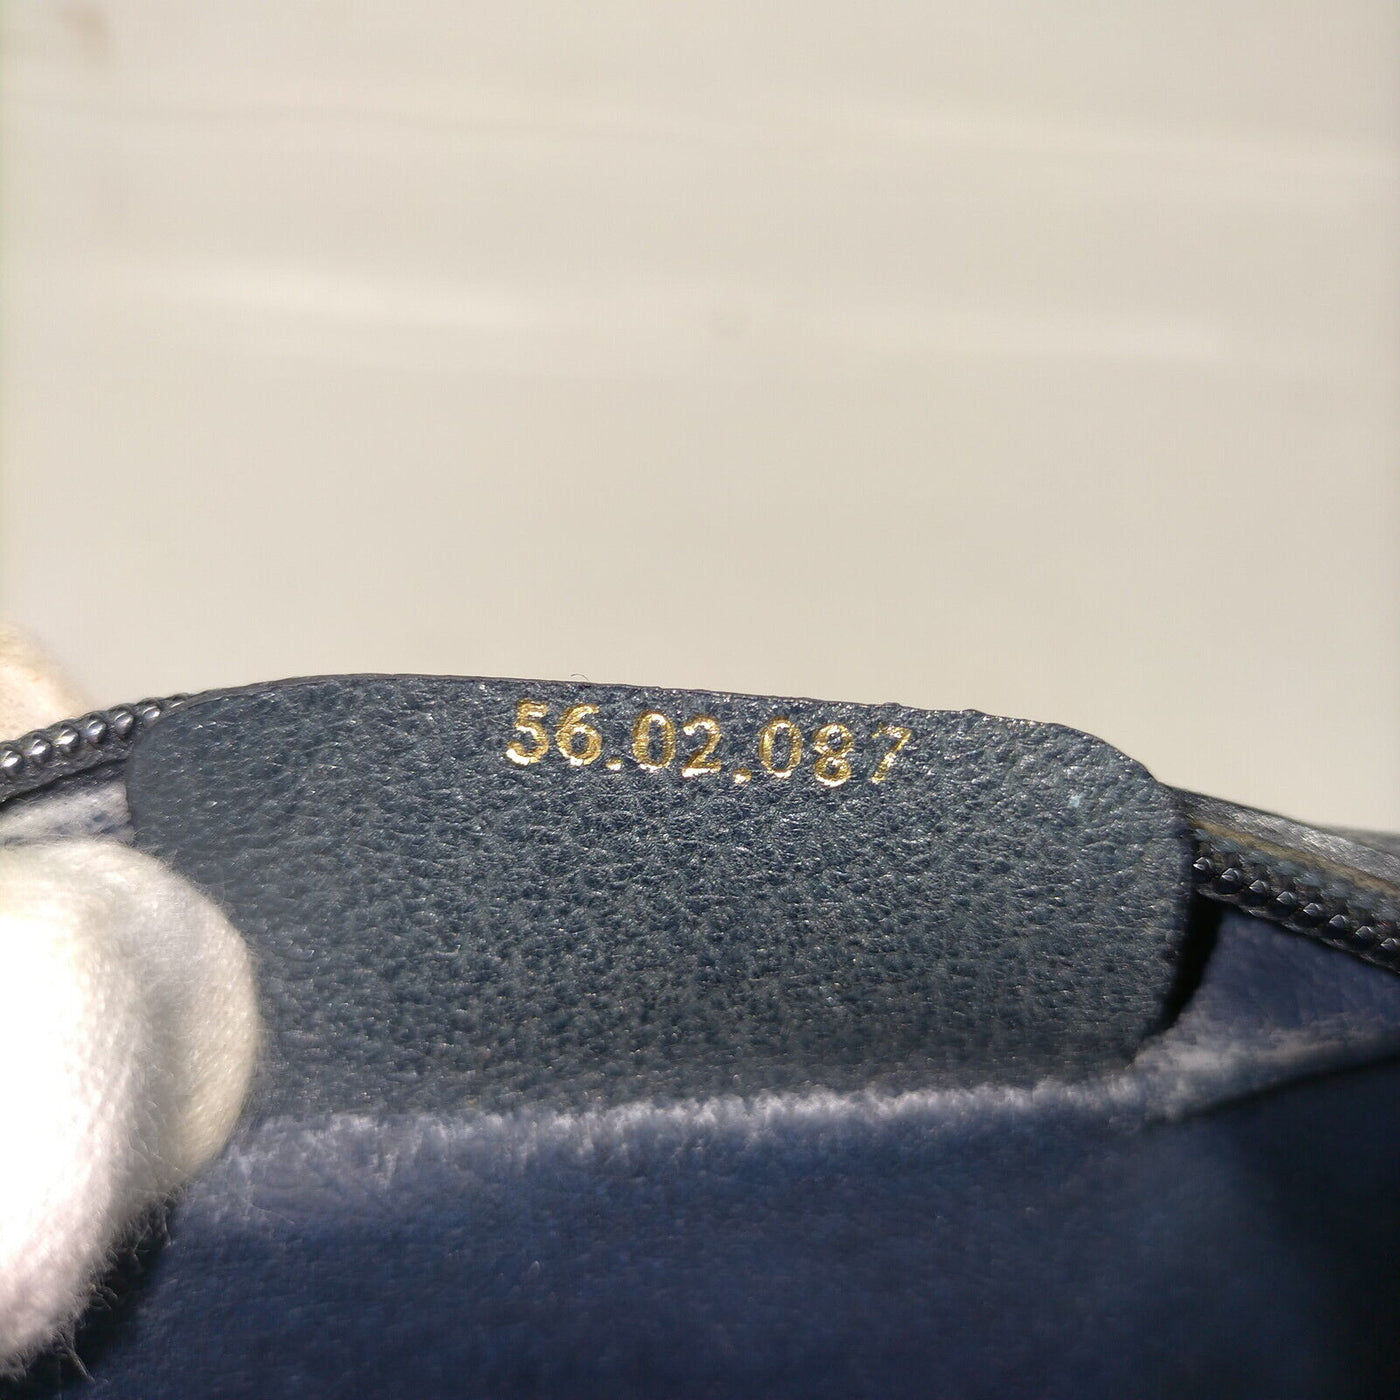 Gucci Vintage Sherry Line Navy Blue PVC Crossbody Bag - Luxury Cheaper